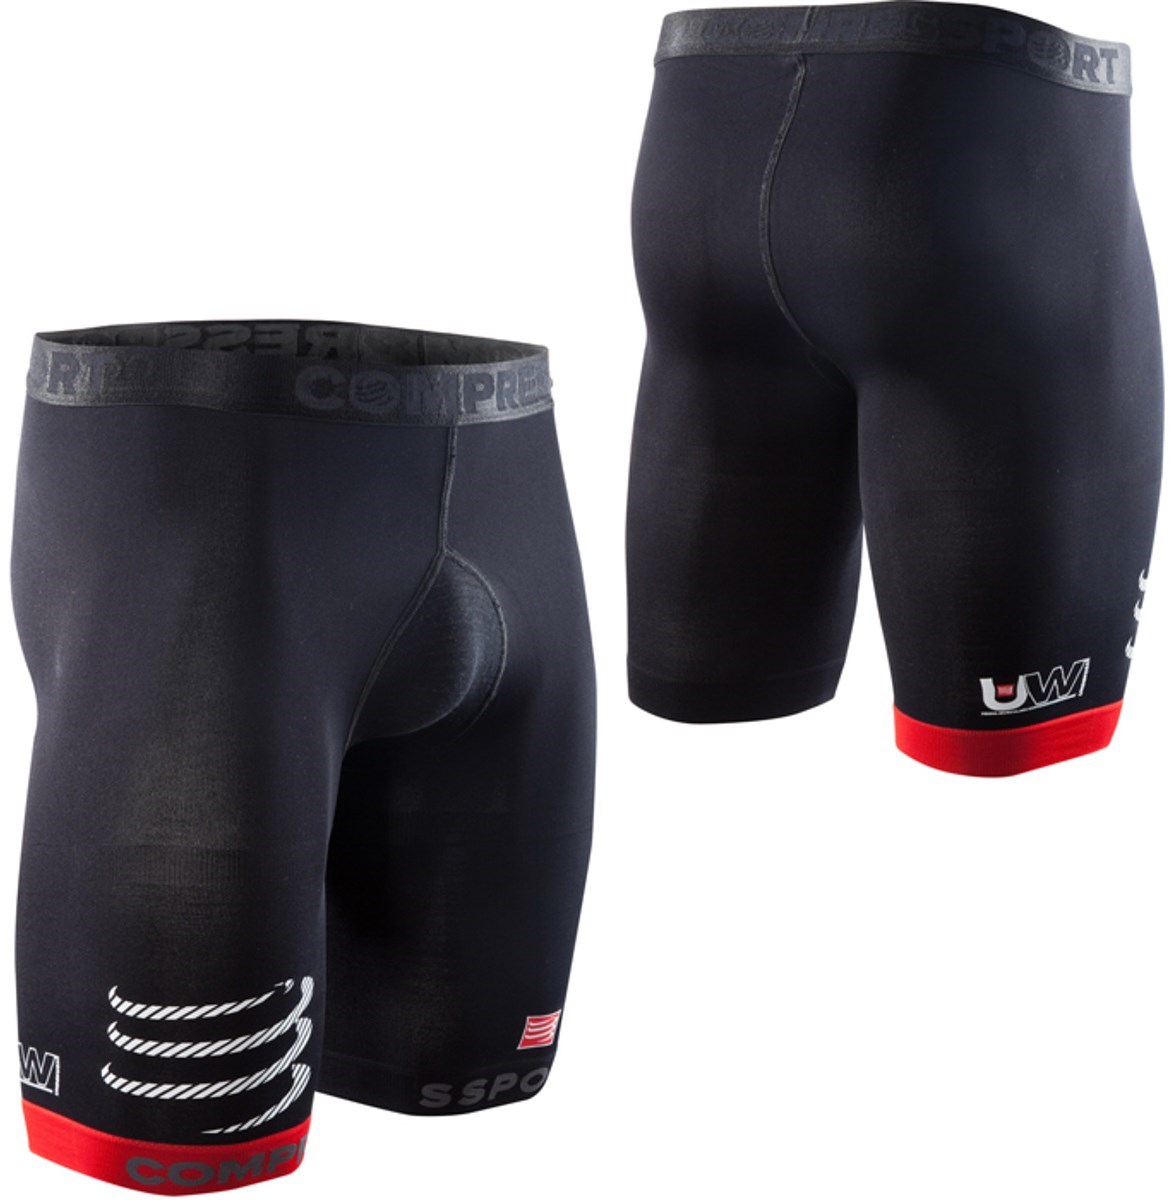 Compressport Underwear Multisport Short product image